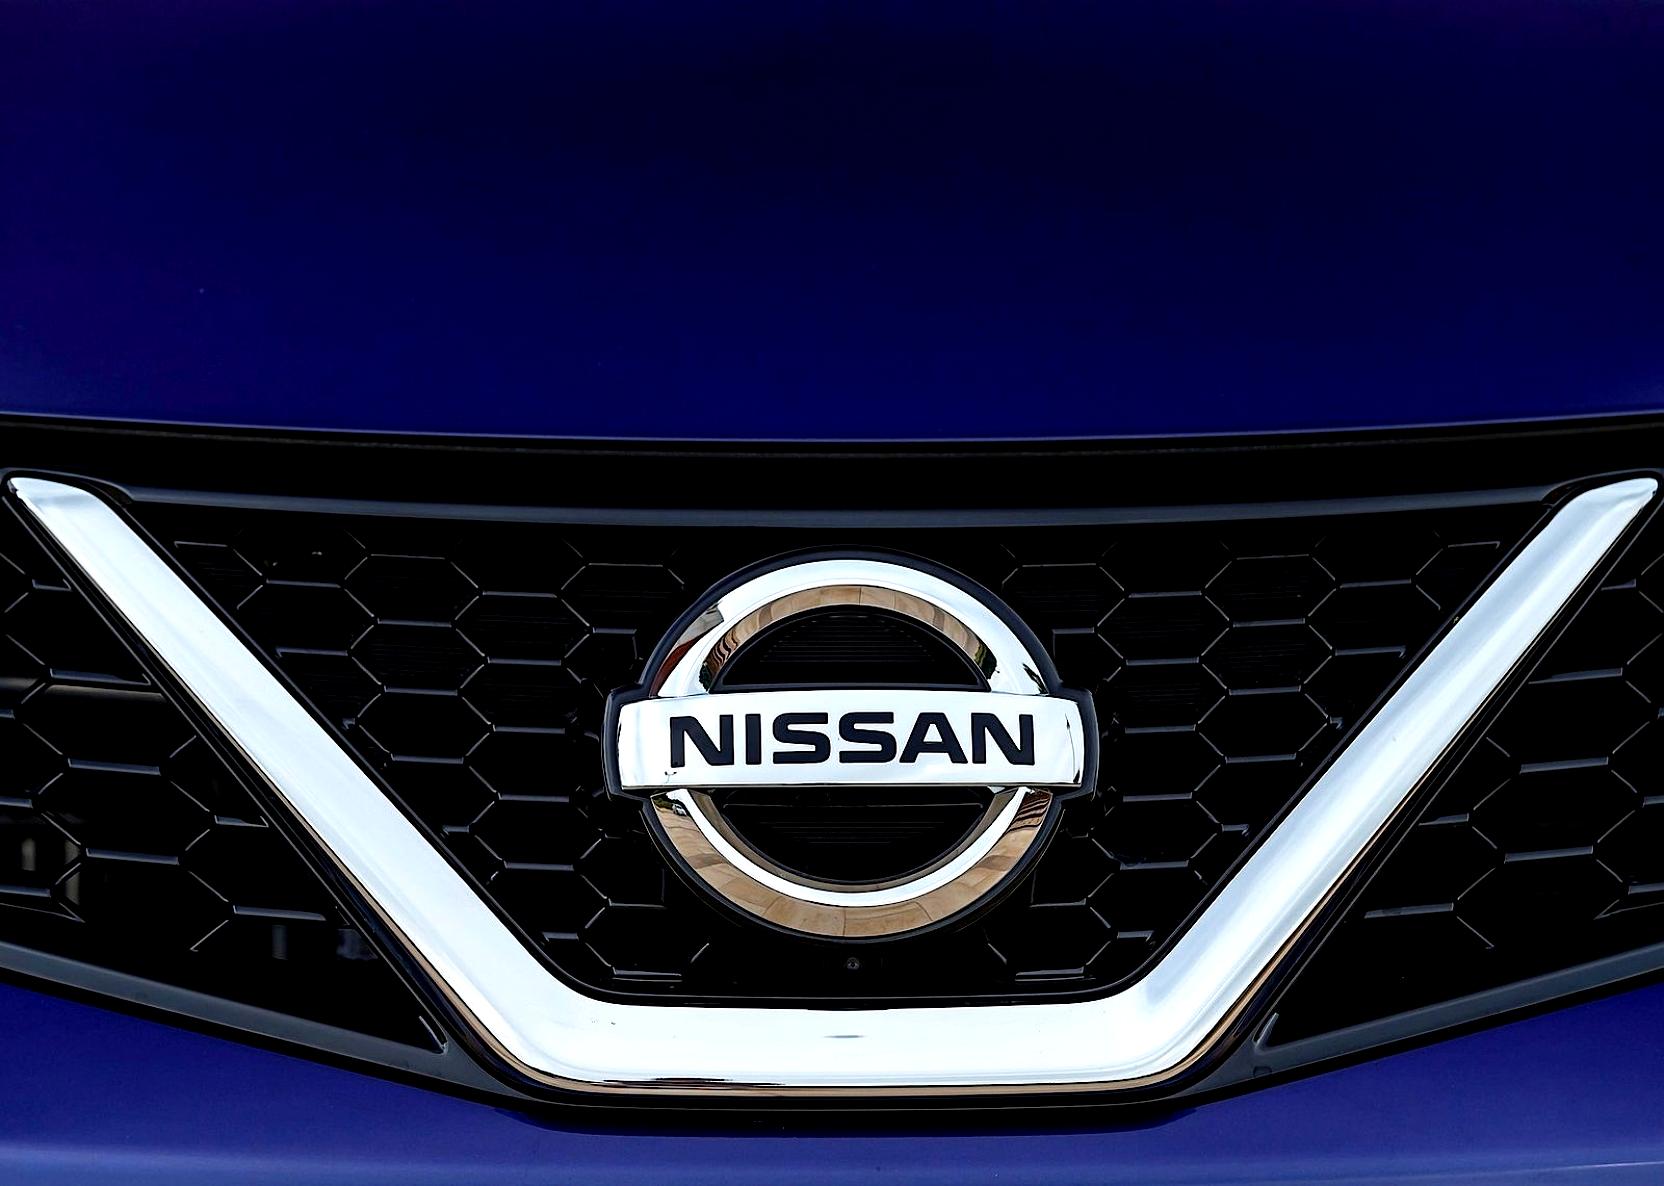 Nissan Pulsar 2014 #80